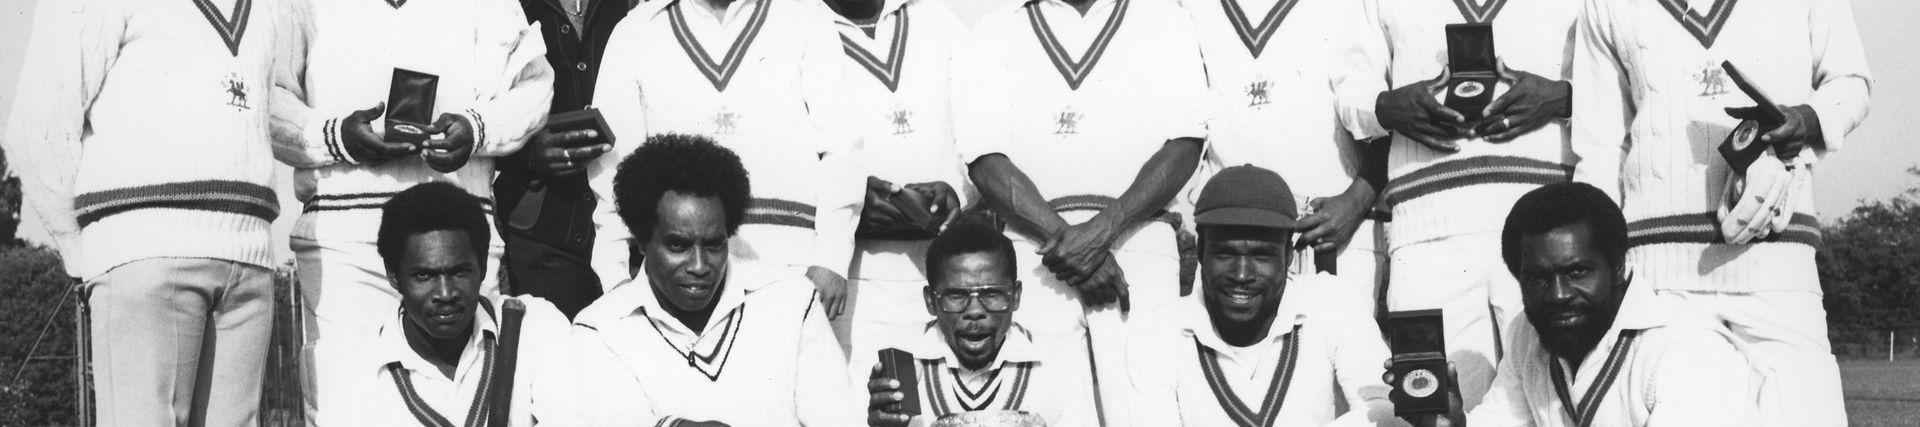 LT Central Road Services cricket team, by J A Ballard ,1984